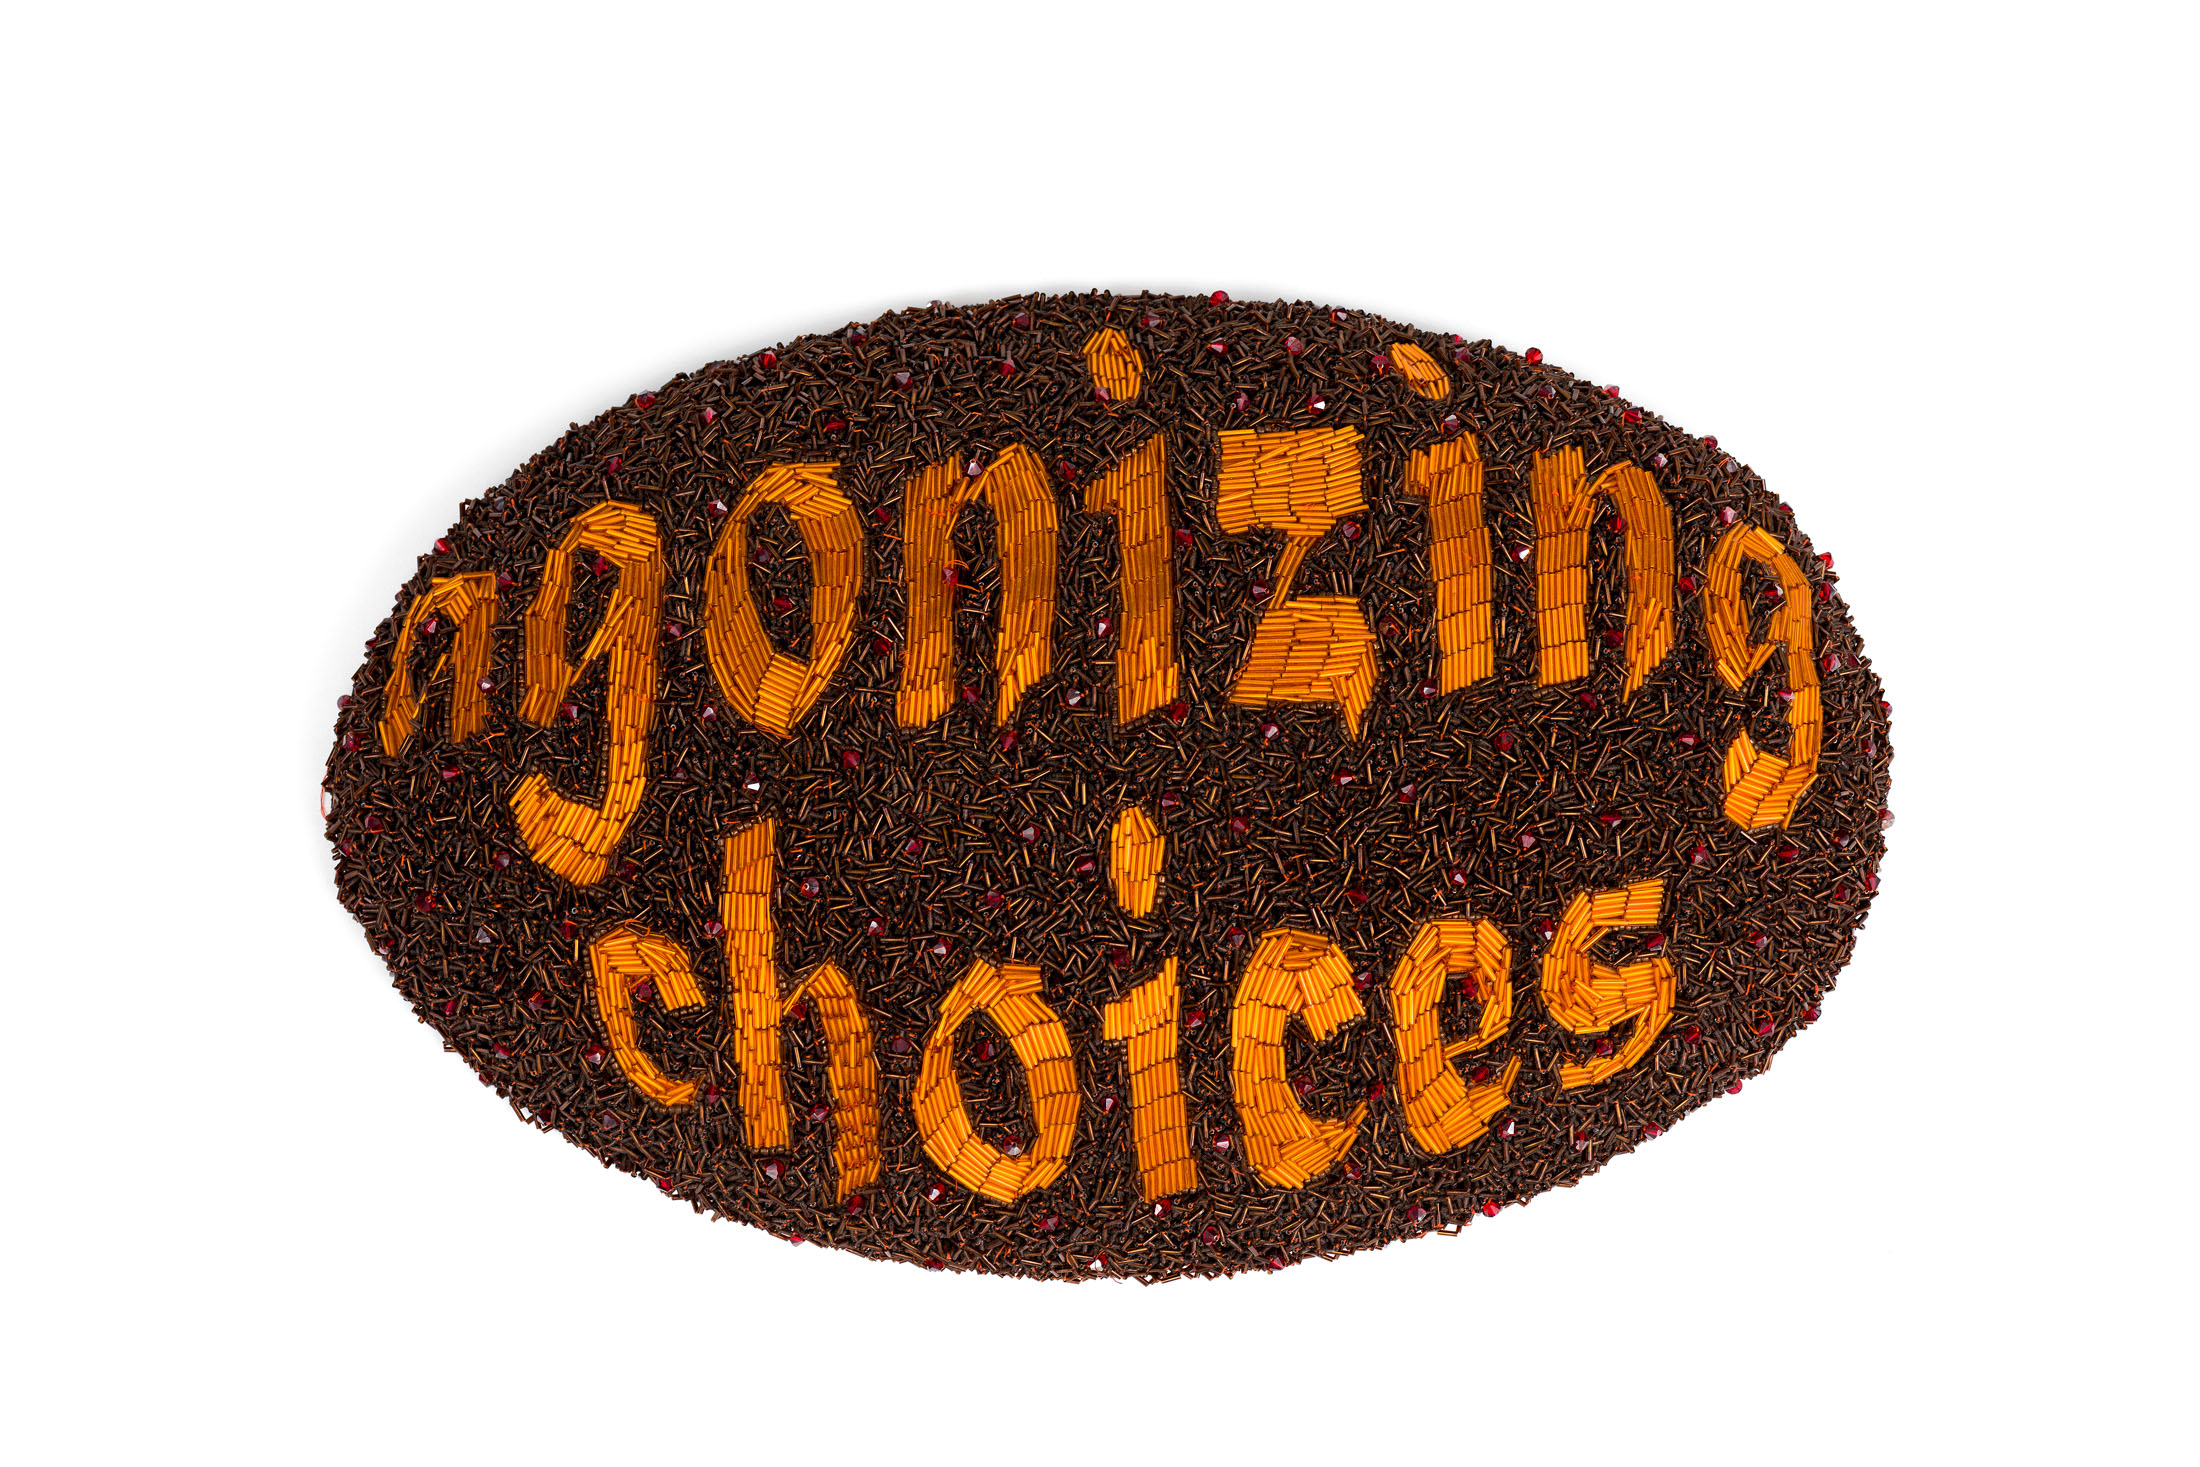 Frances Goodman; Agonizing Choices